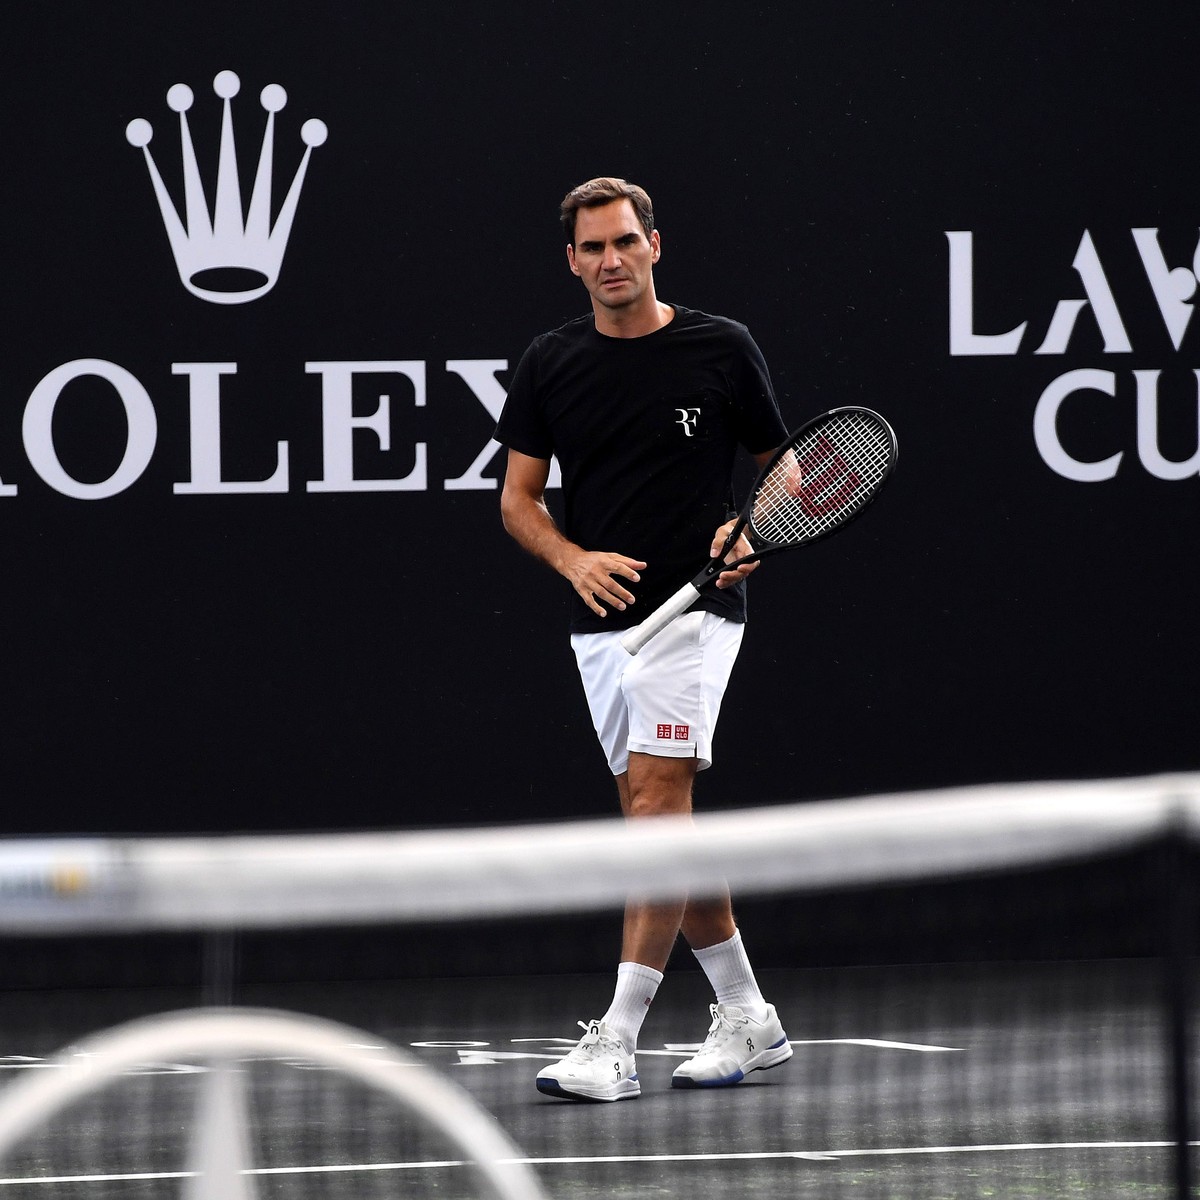 Hier siehst du Roger Federers letztes Tennis-Match im Free-TV